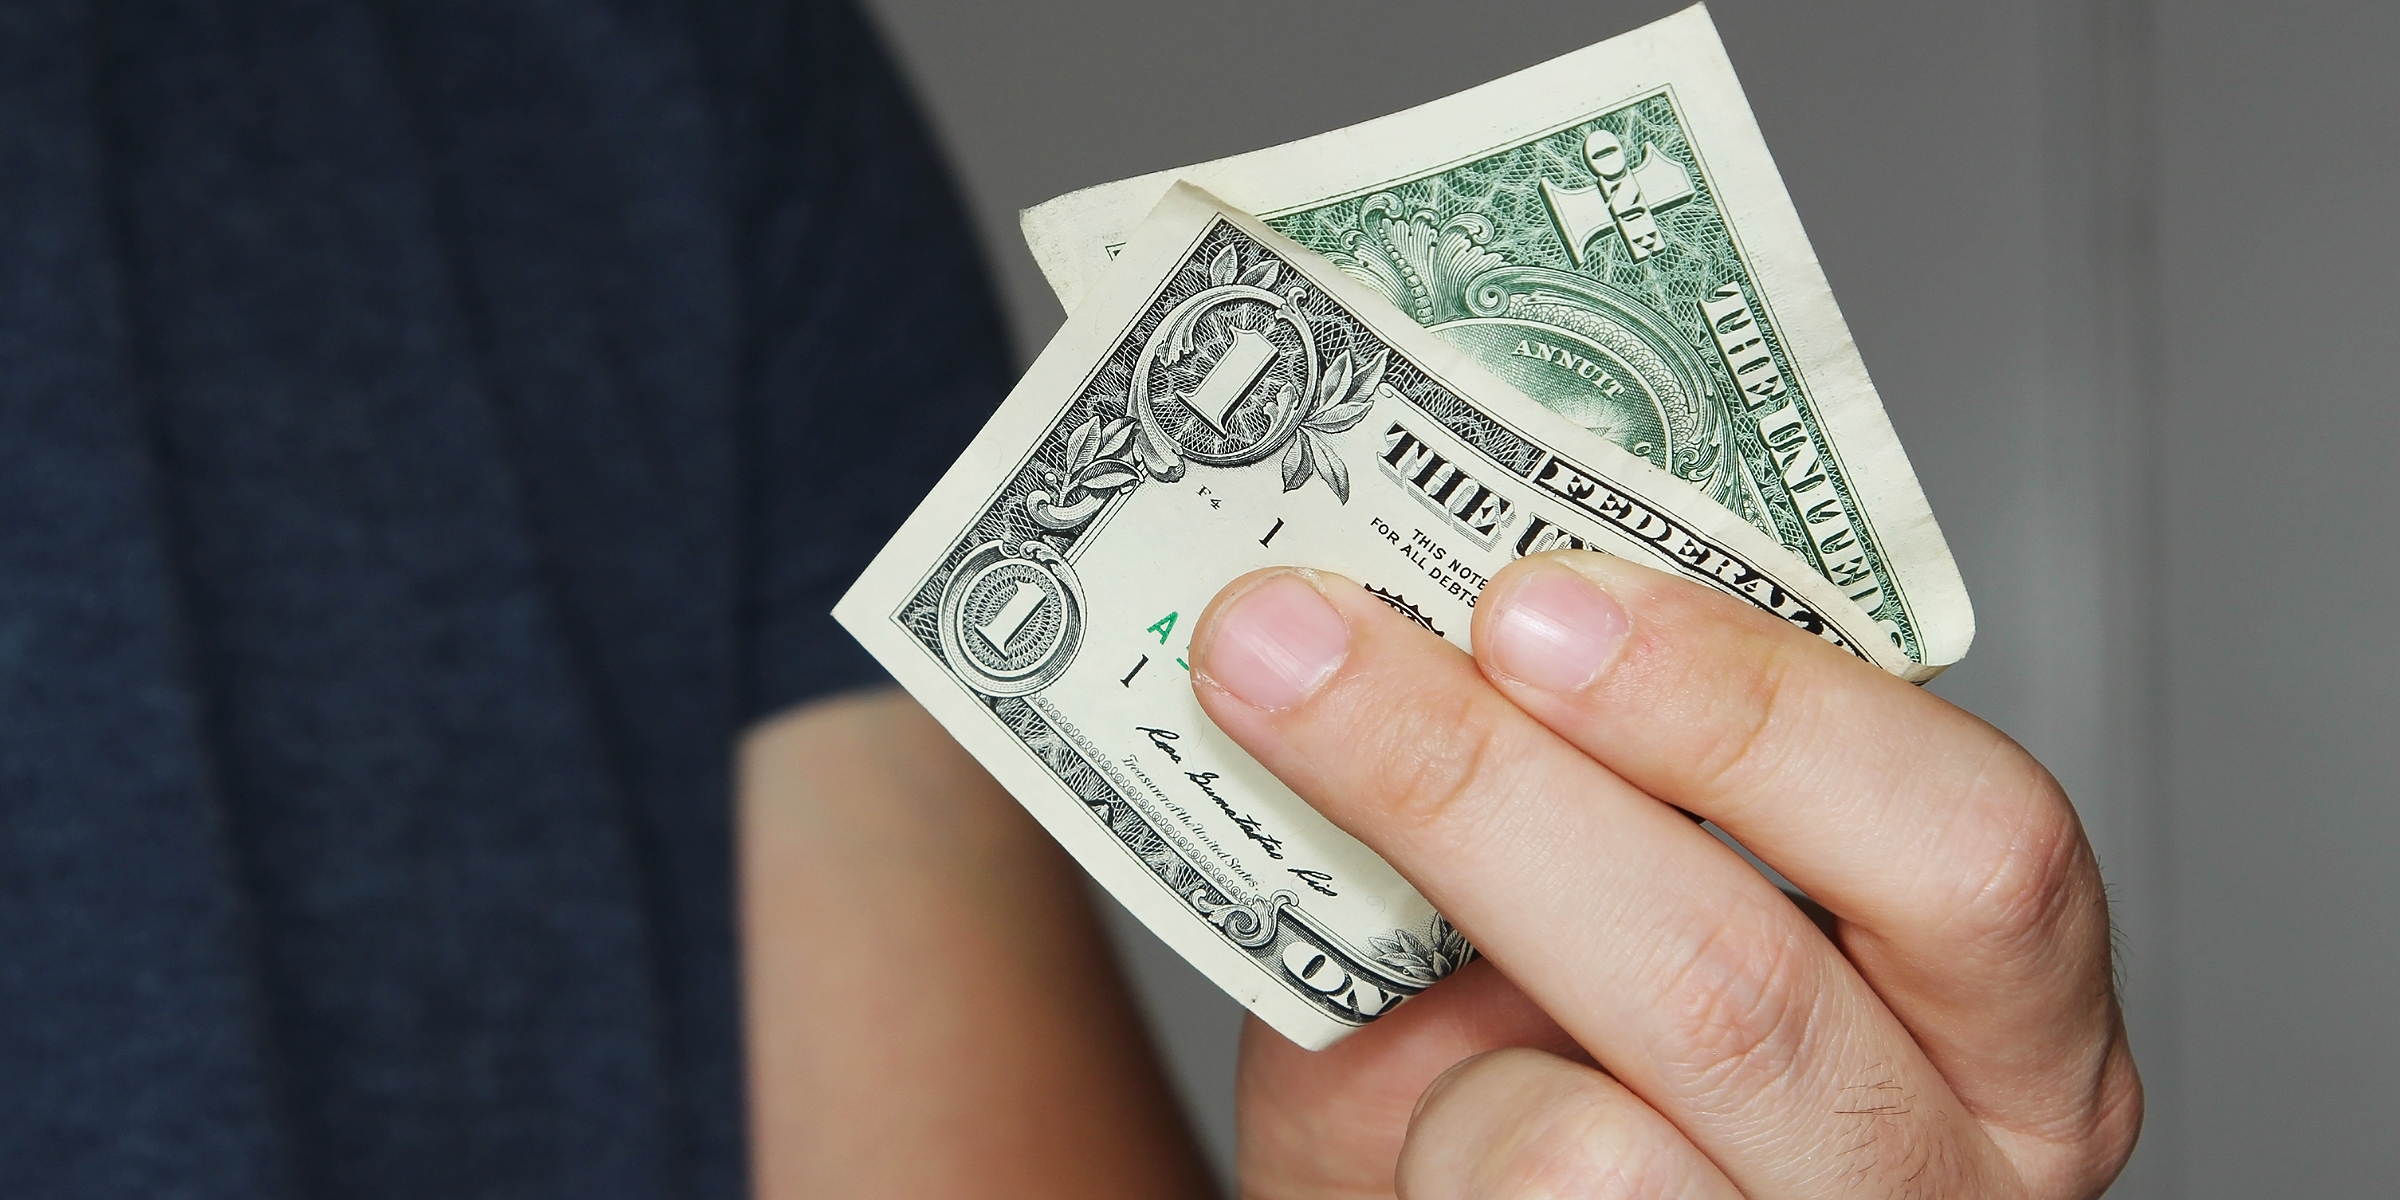 A person holding a $1 bill | Source: Shutterstock